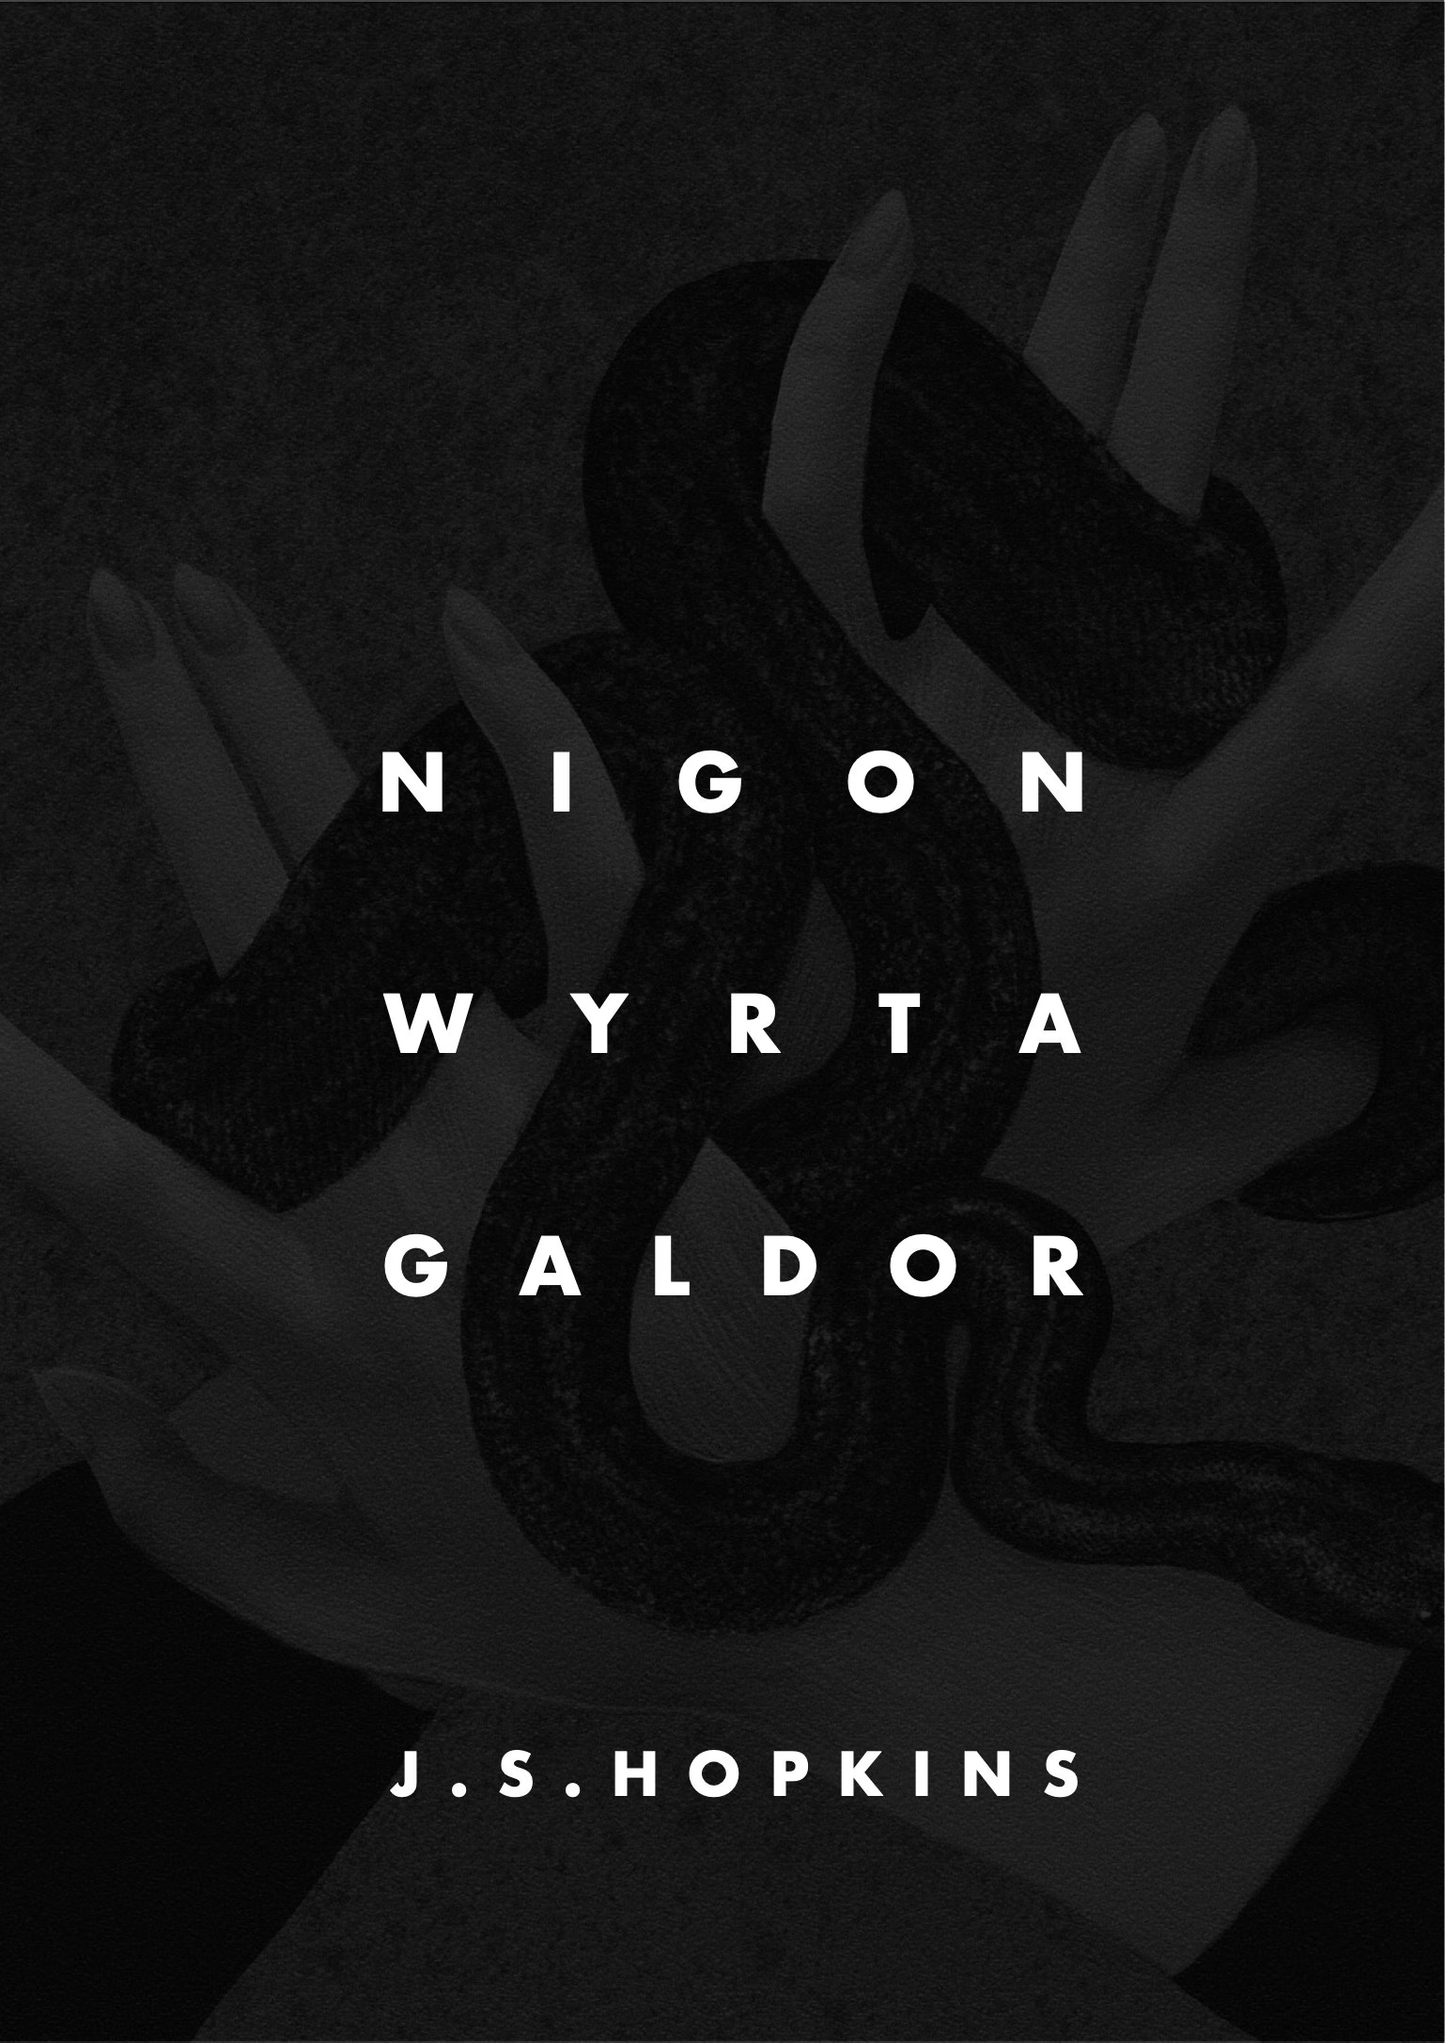 J. S. Hopkins's "Nigon Wyrta Galdor: The Nine Herbs Charm"